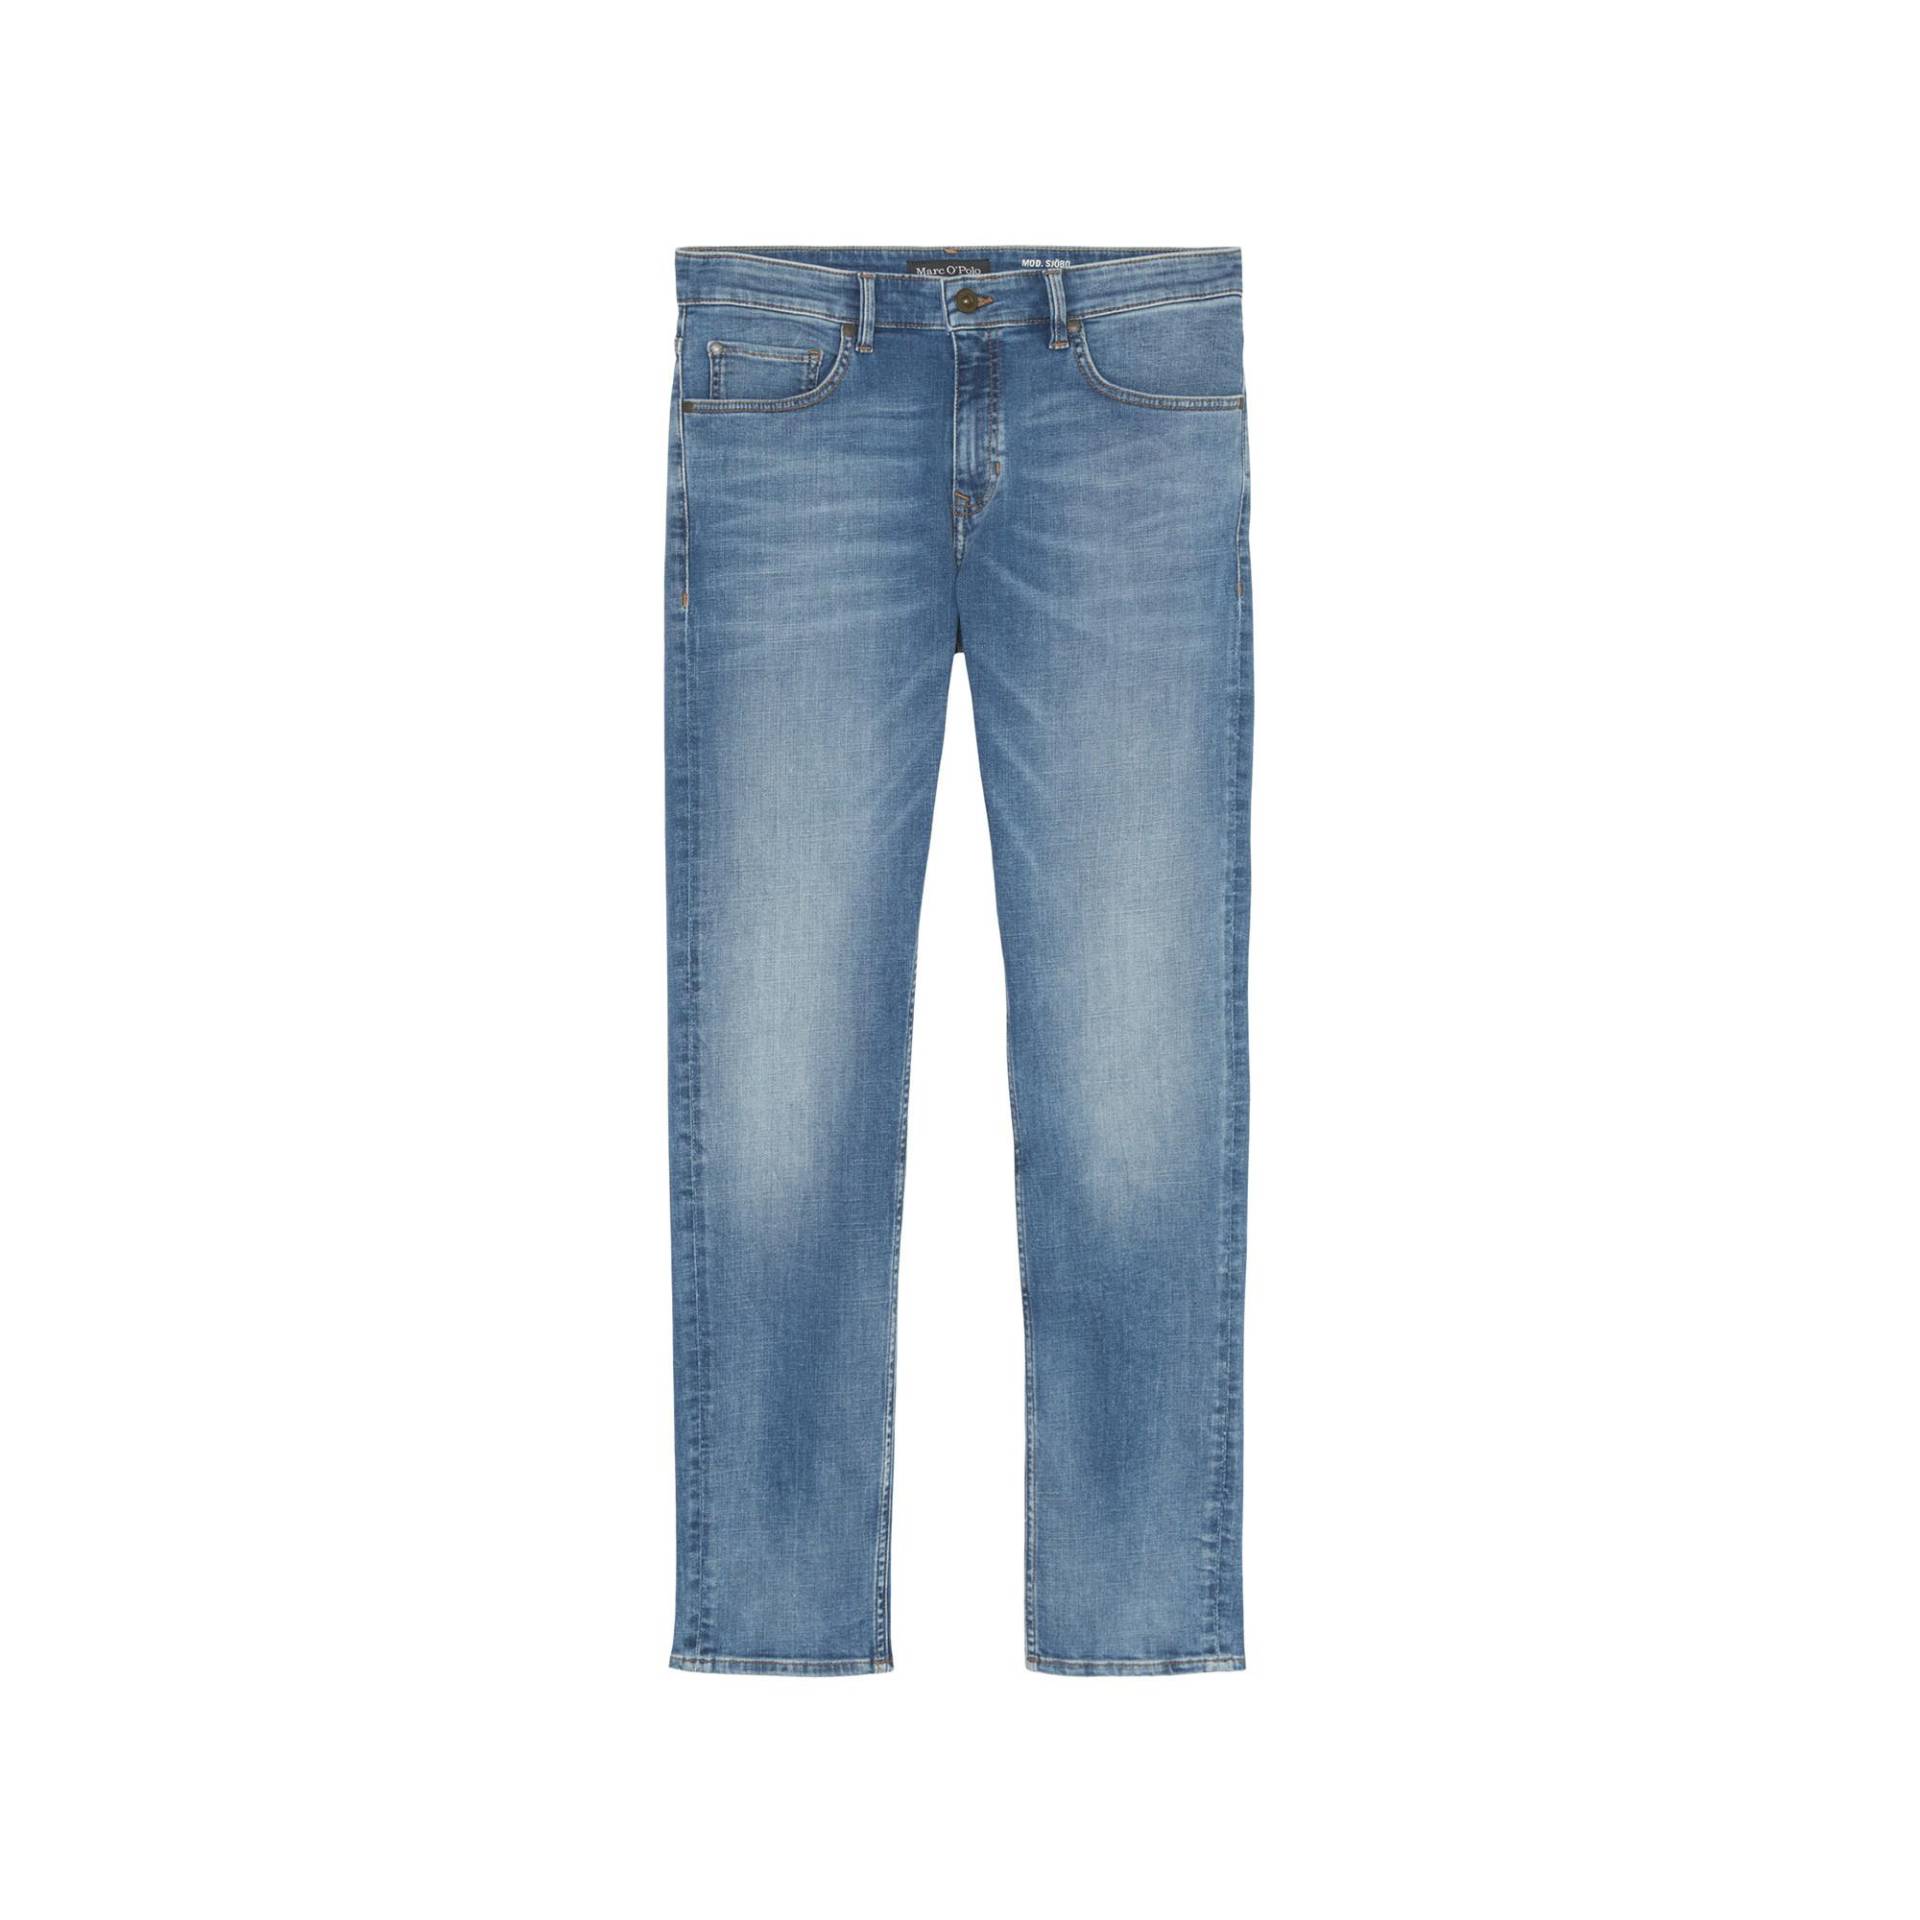 Jeans, Slim Fit Herren Blau W33 von Marc O'Polo